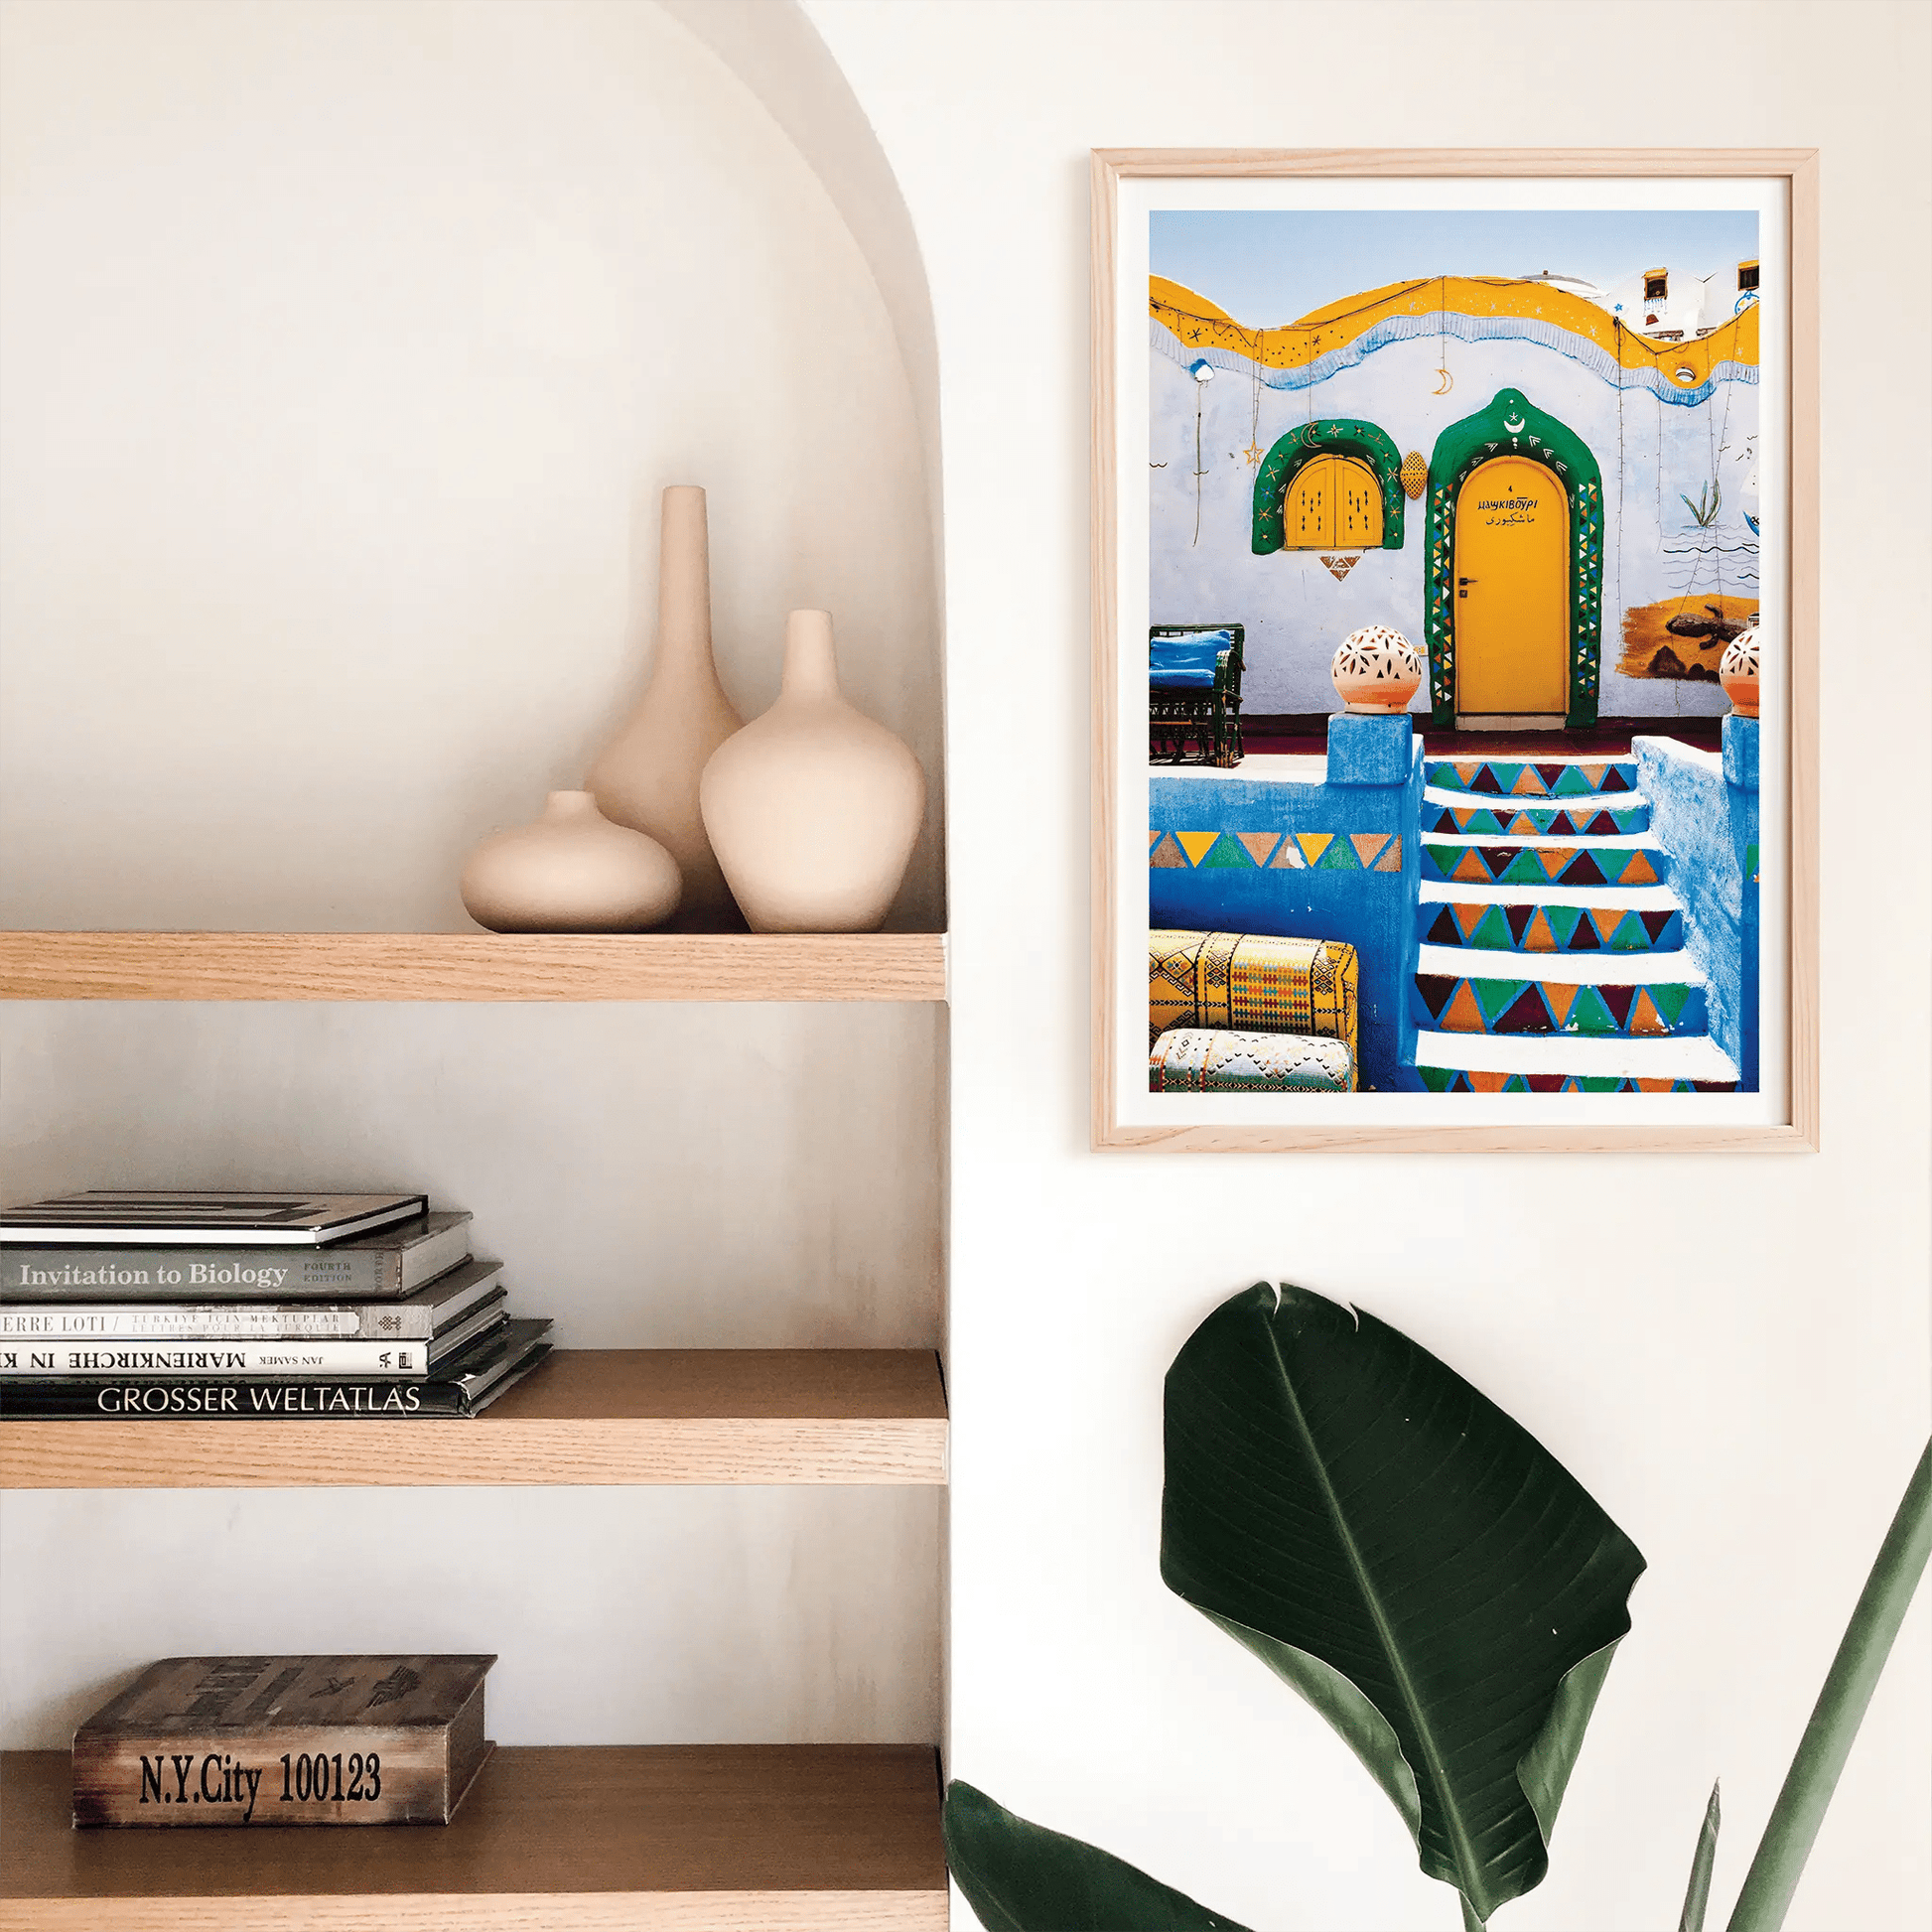 Aswan Chromatica Poster - The Globe Gallery